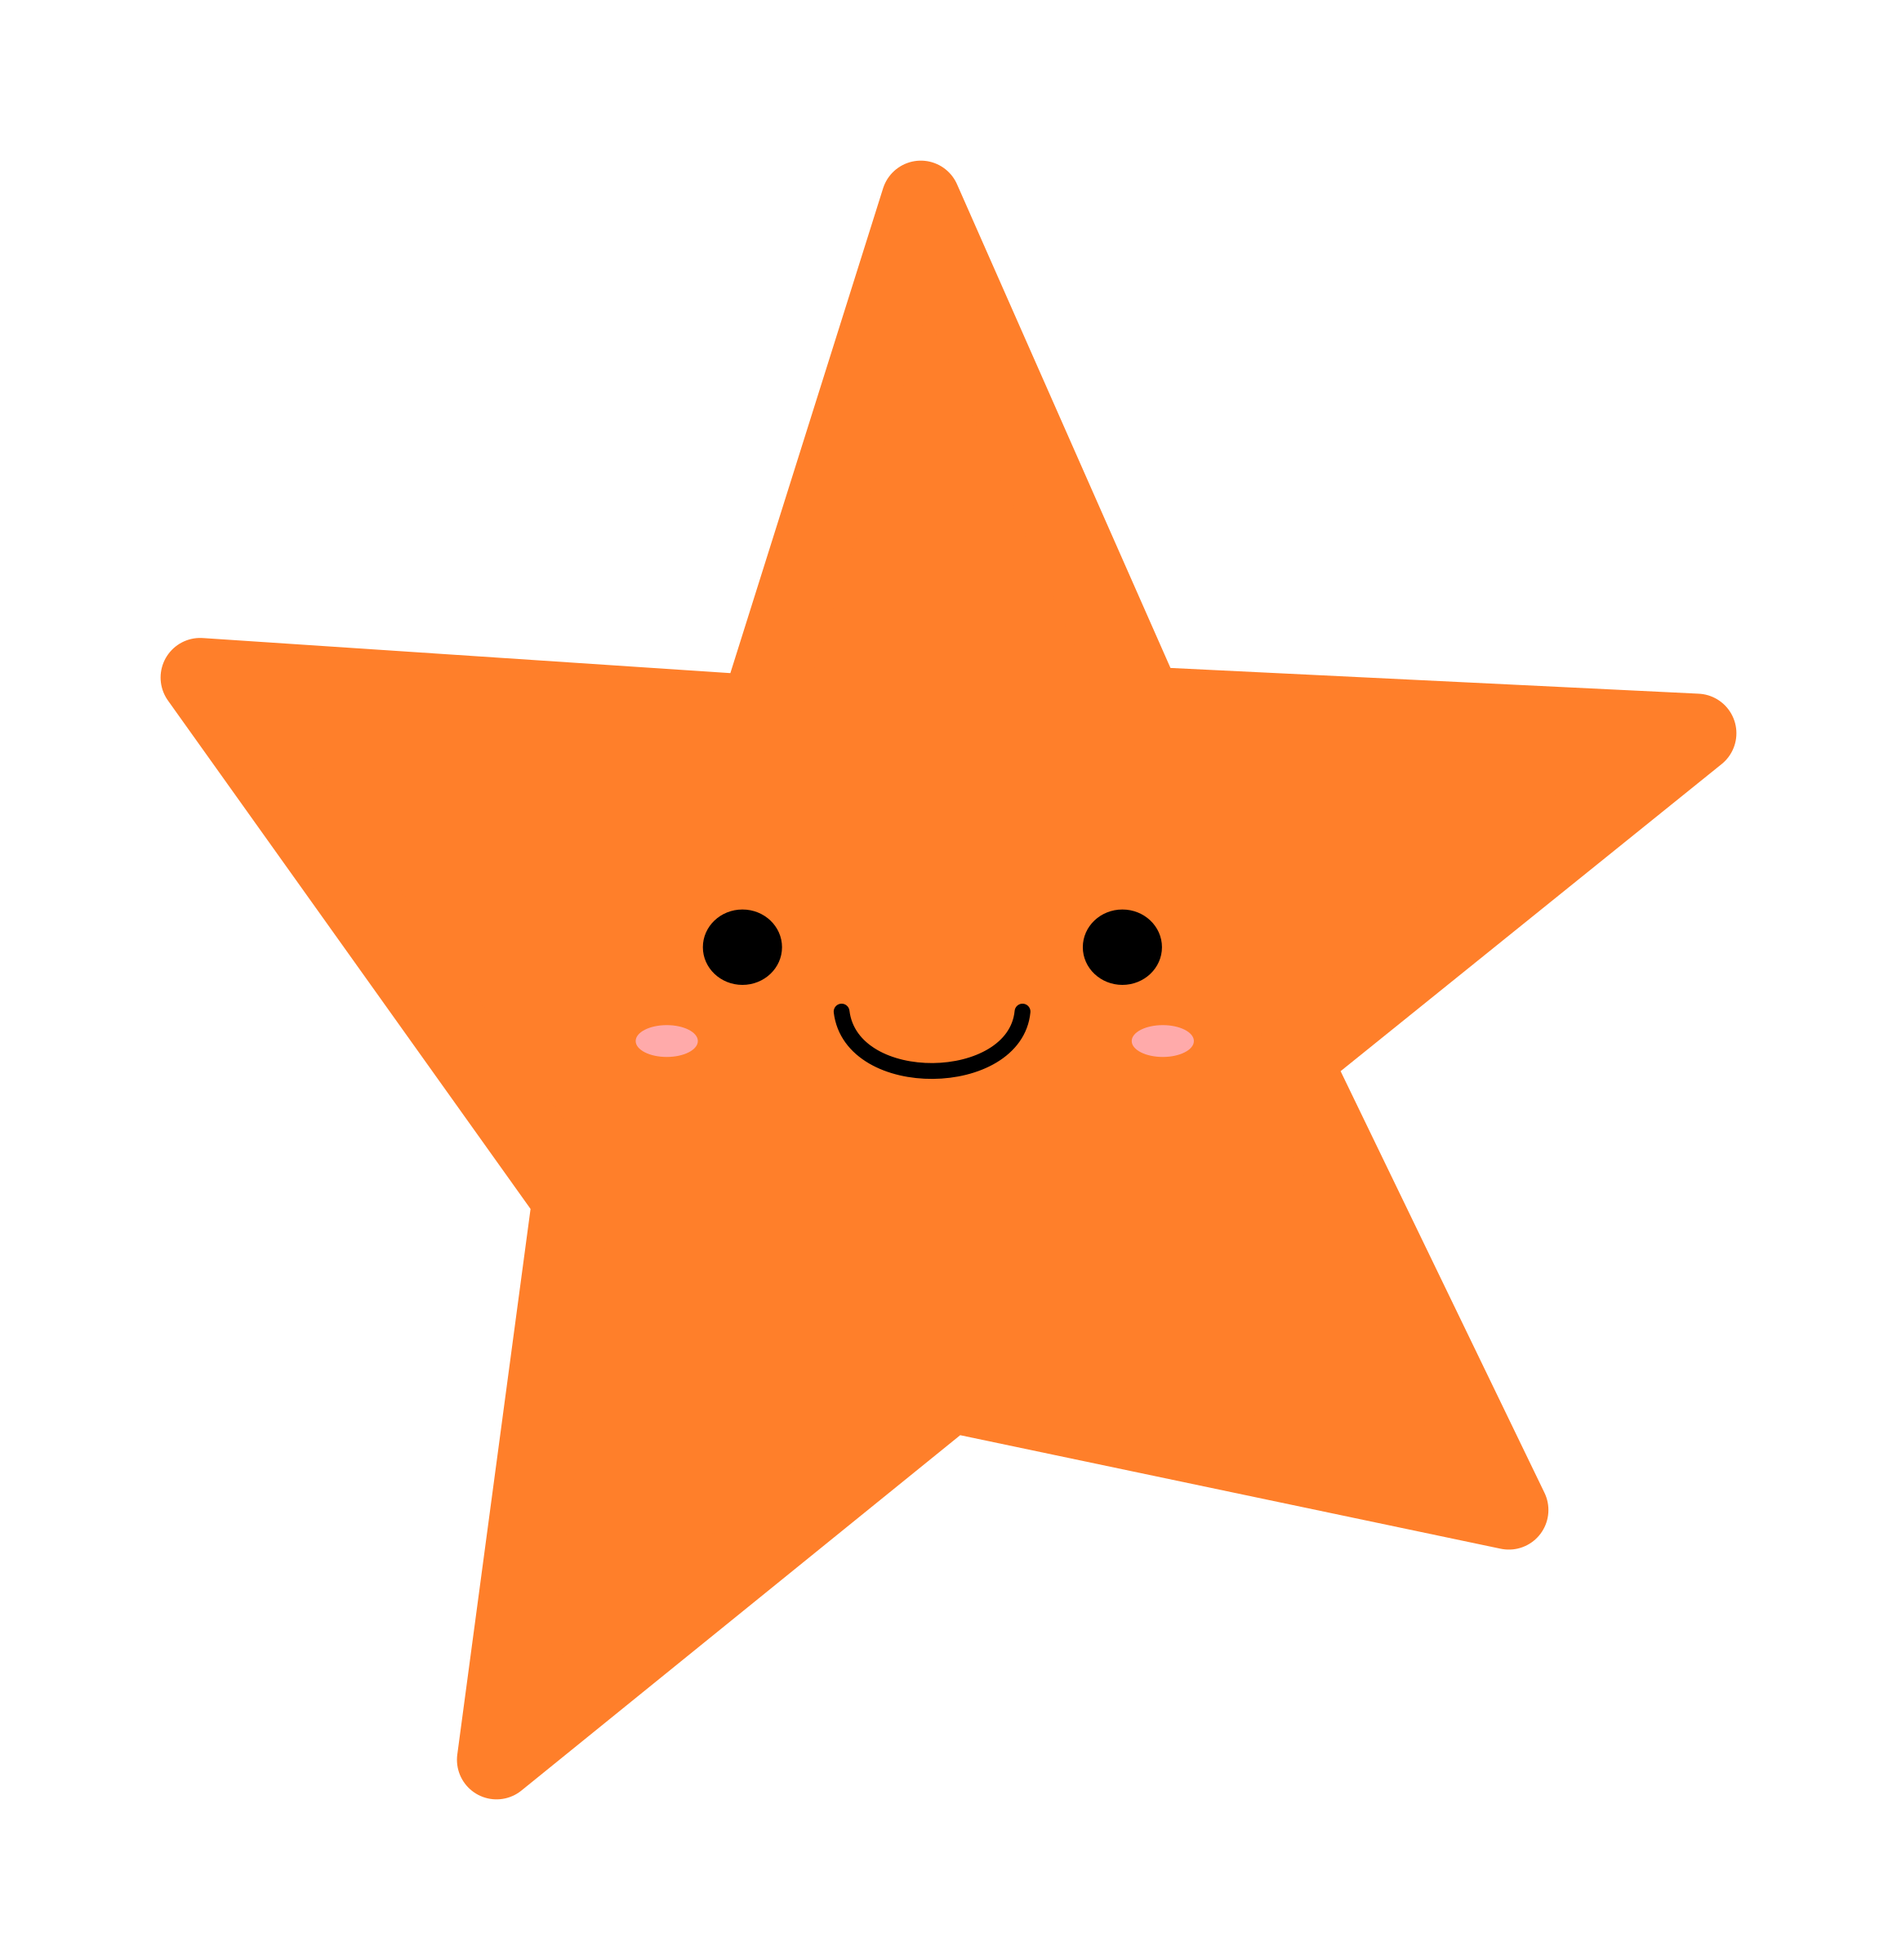 Download Orange Star vector clipart image - Free stock photo - Public Domain photo - CC0 Images